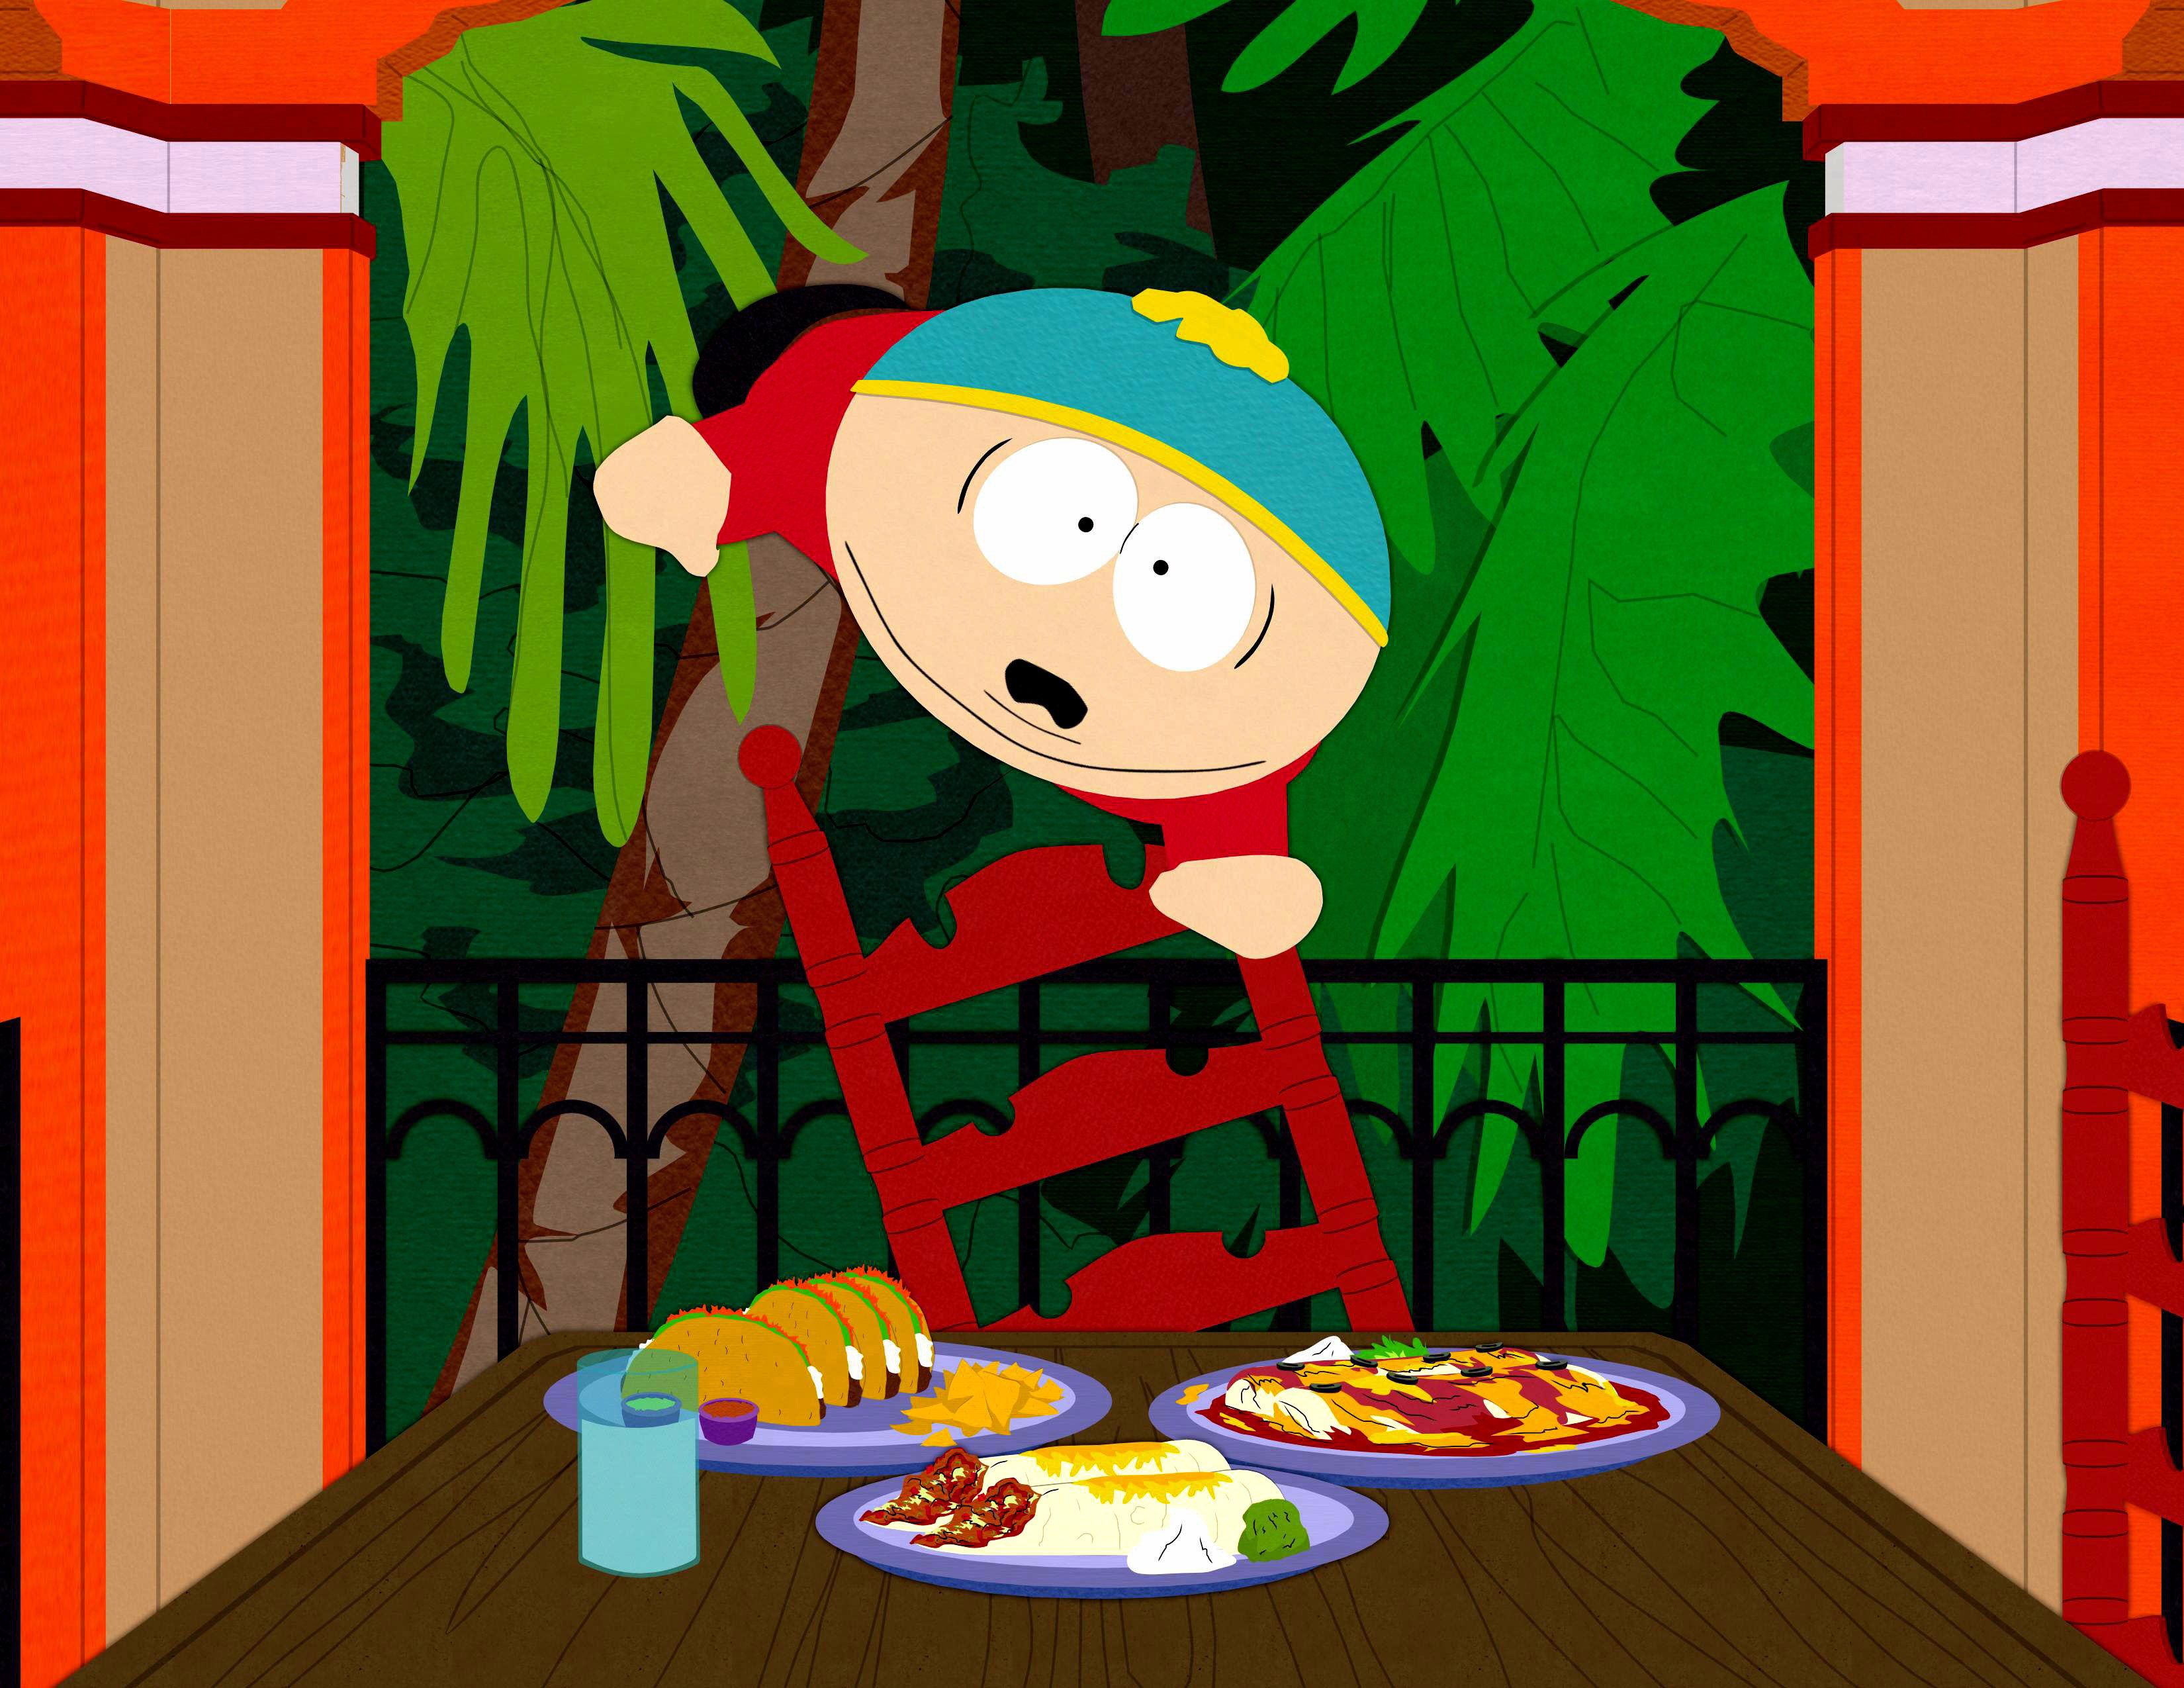 Cartman climbs in the trees at Casa Bonita